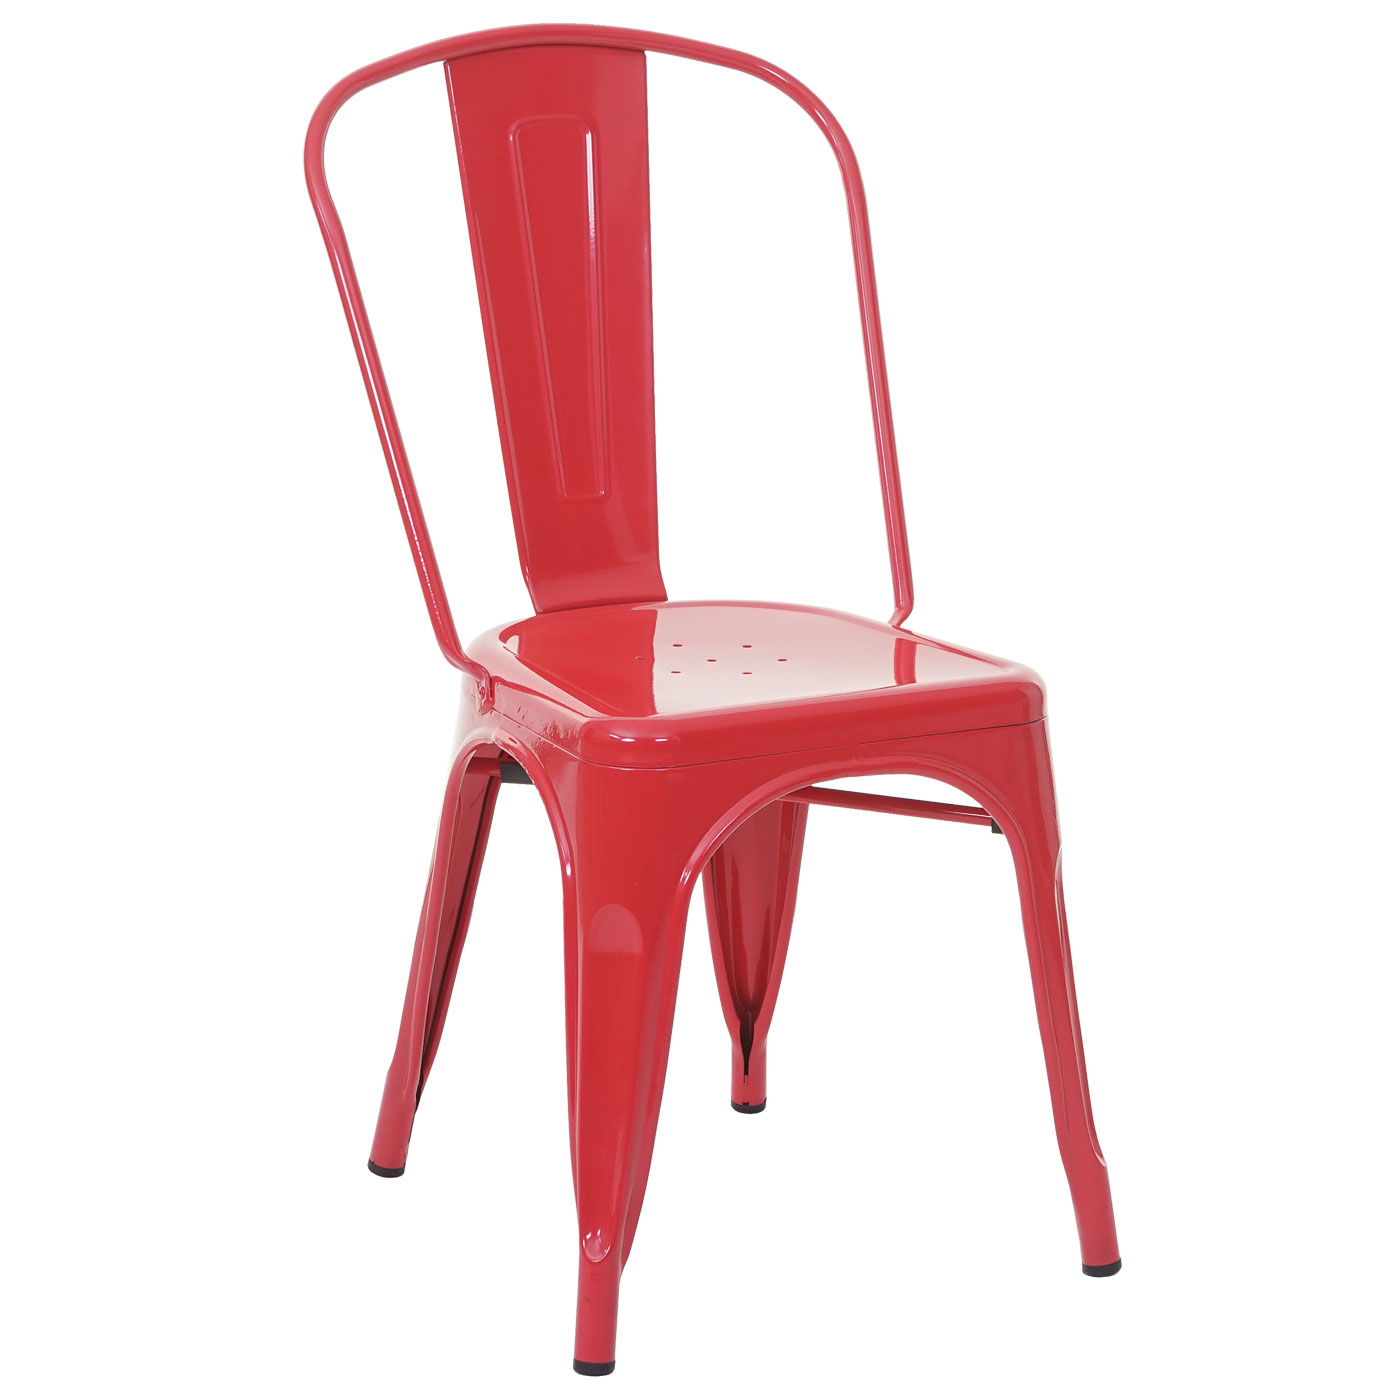 Bistrostuhl Metall Stuhl Stapelstuhl, ~ stapelbar Heute-Wohnen HWC-A73, rot Industriedesign von